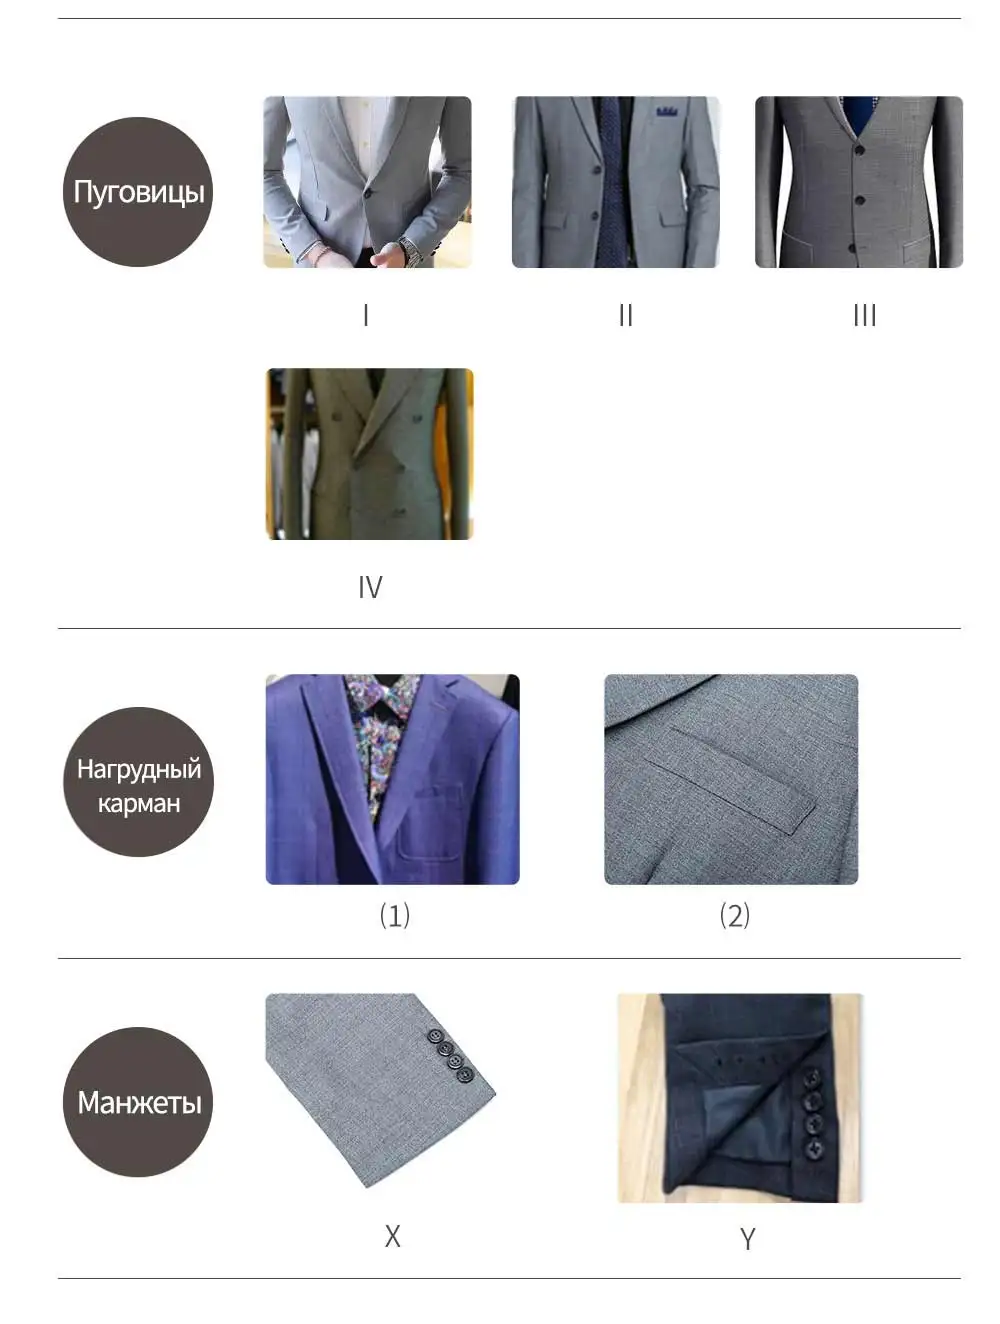 Wrwcm на заказ мужской костюм высокого качества на заказ поддержка предприятия изготовление на заказ джентльменский стиль на заказ